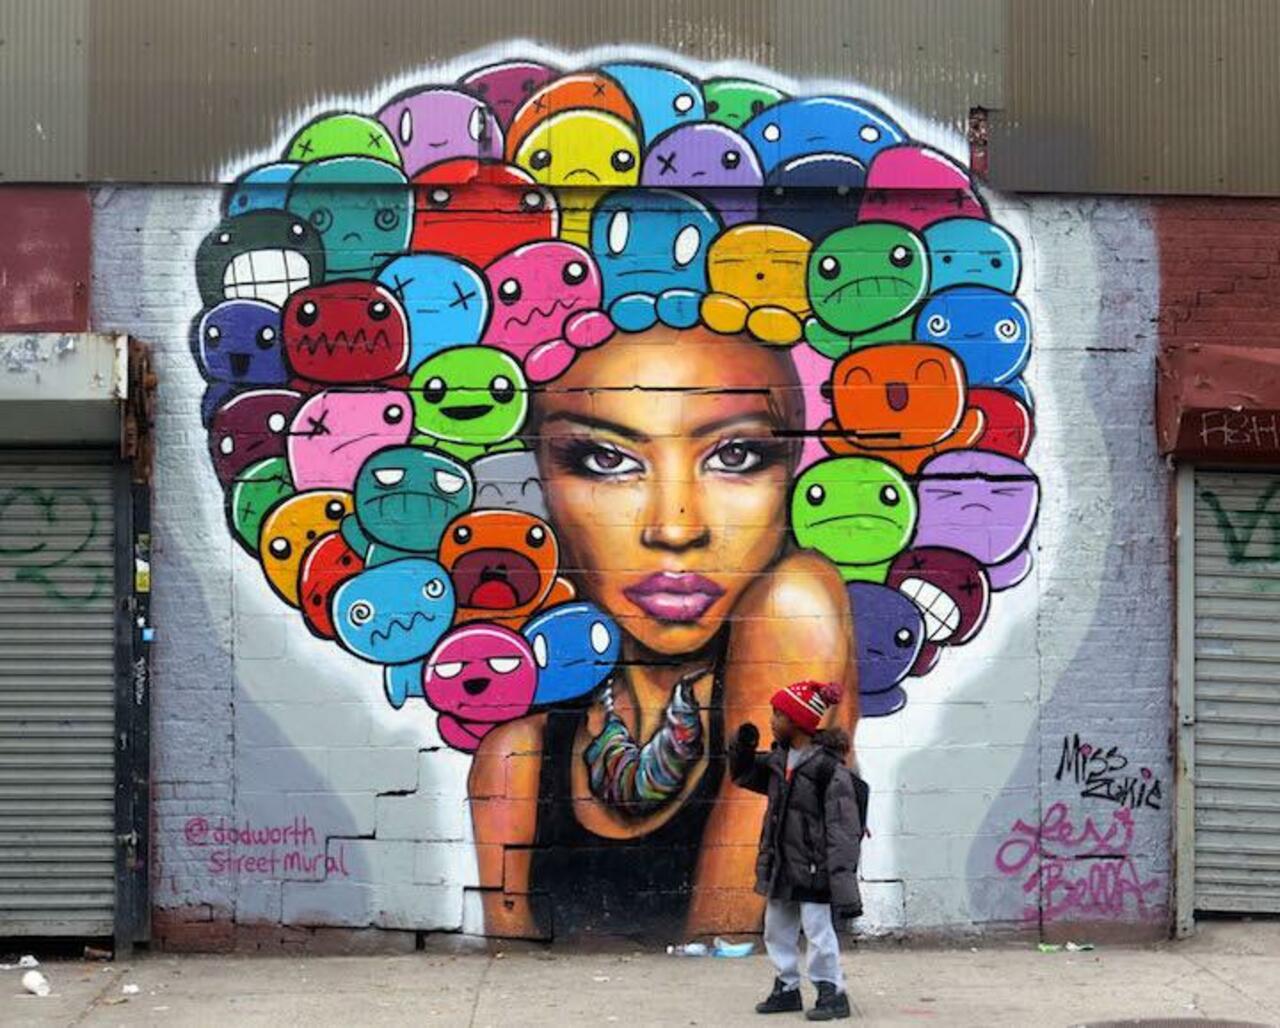 Miss Zukie & Lexi Bella
#streetart #graffiti #art #mural http://t.co/RxG8SjSYEo